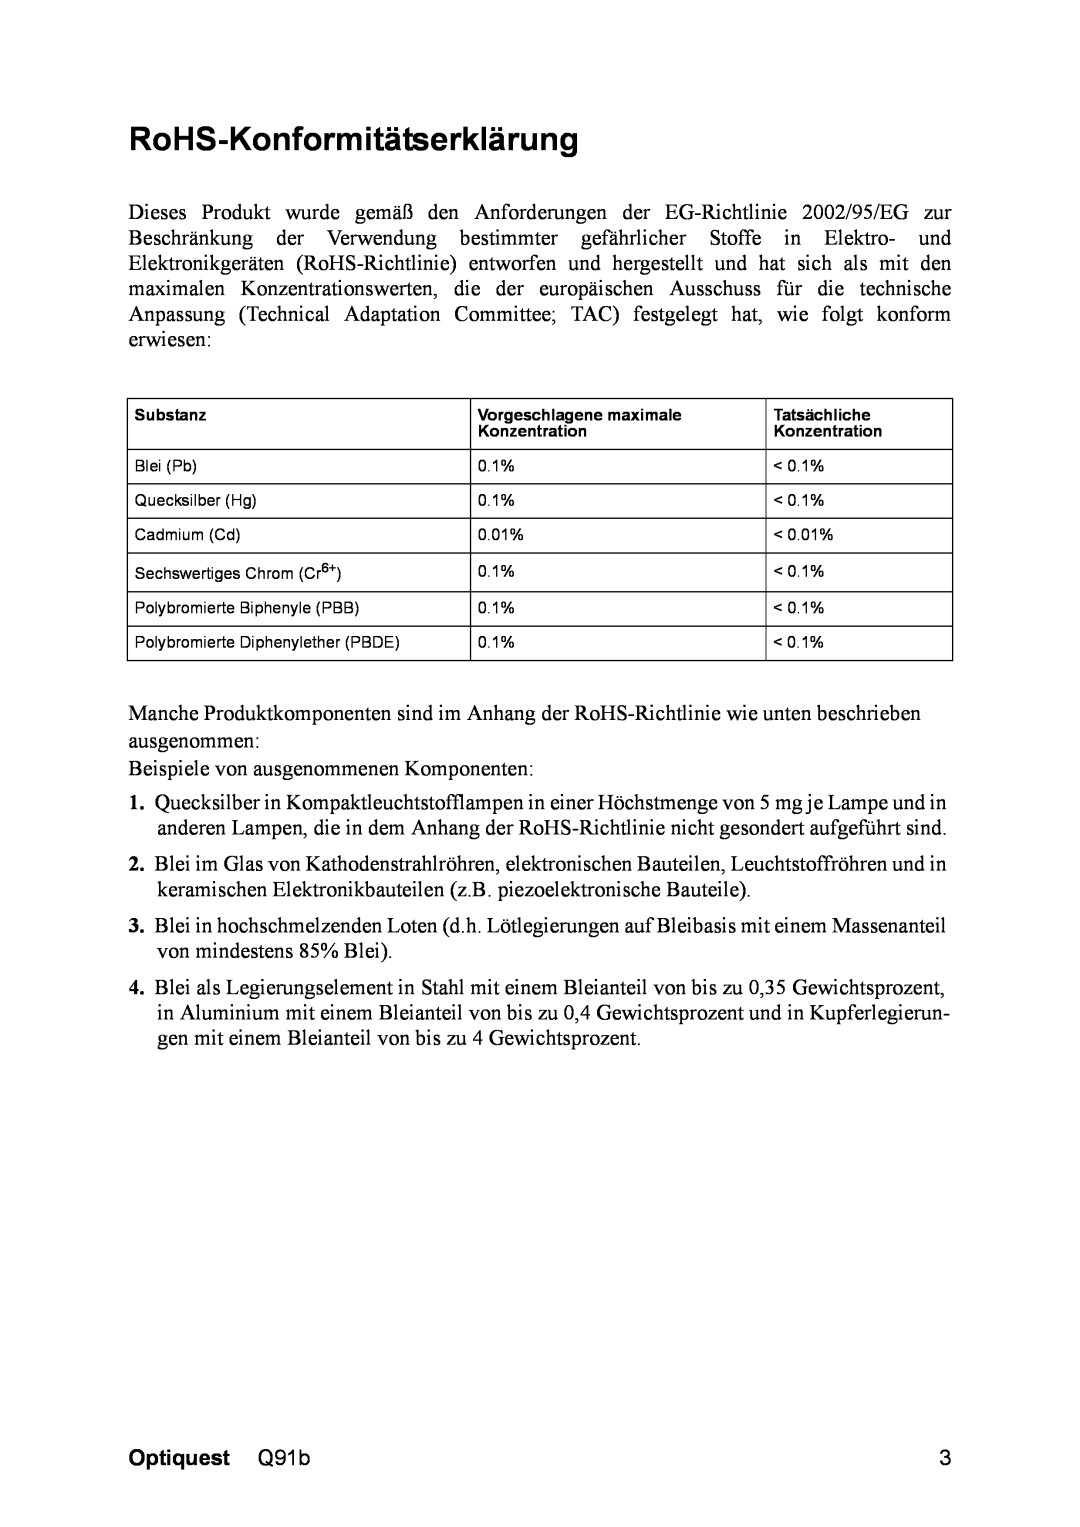 ViewSonic Q91B, VS12118 manual RoHS-Konformitätserklärung, Optiquest Q91b 